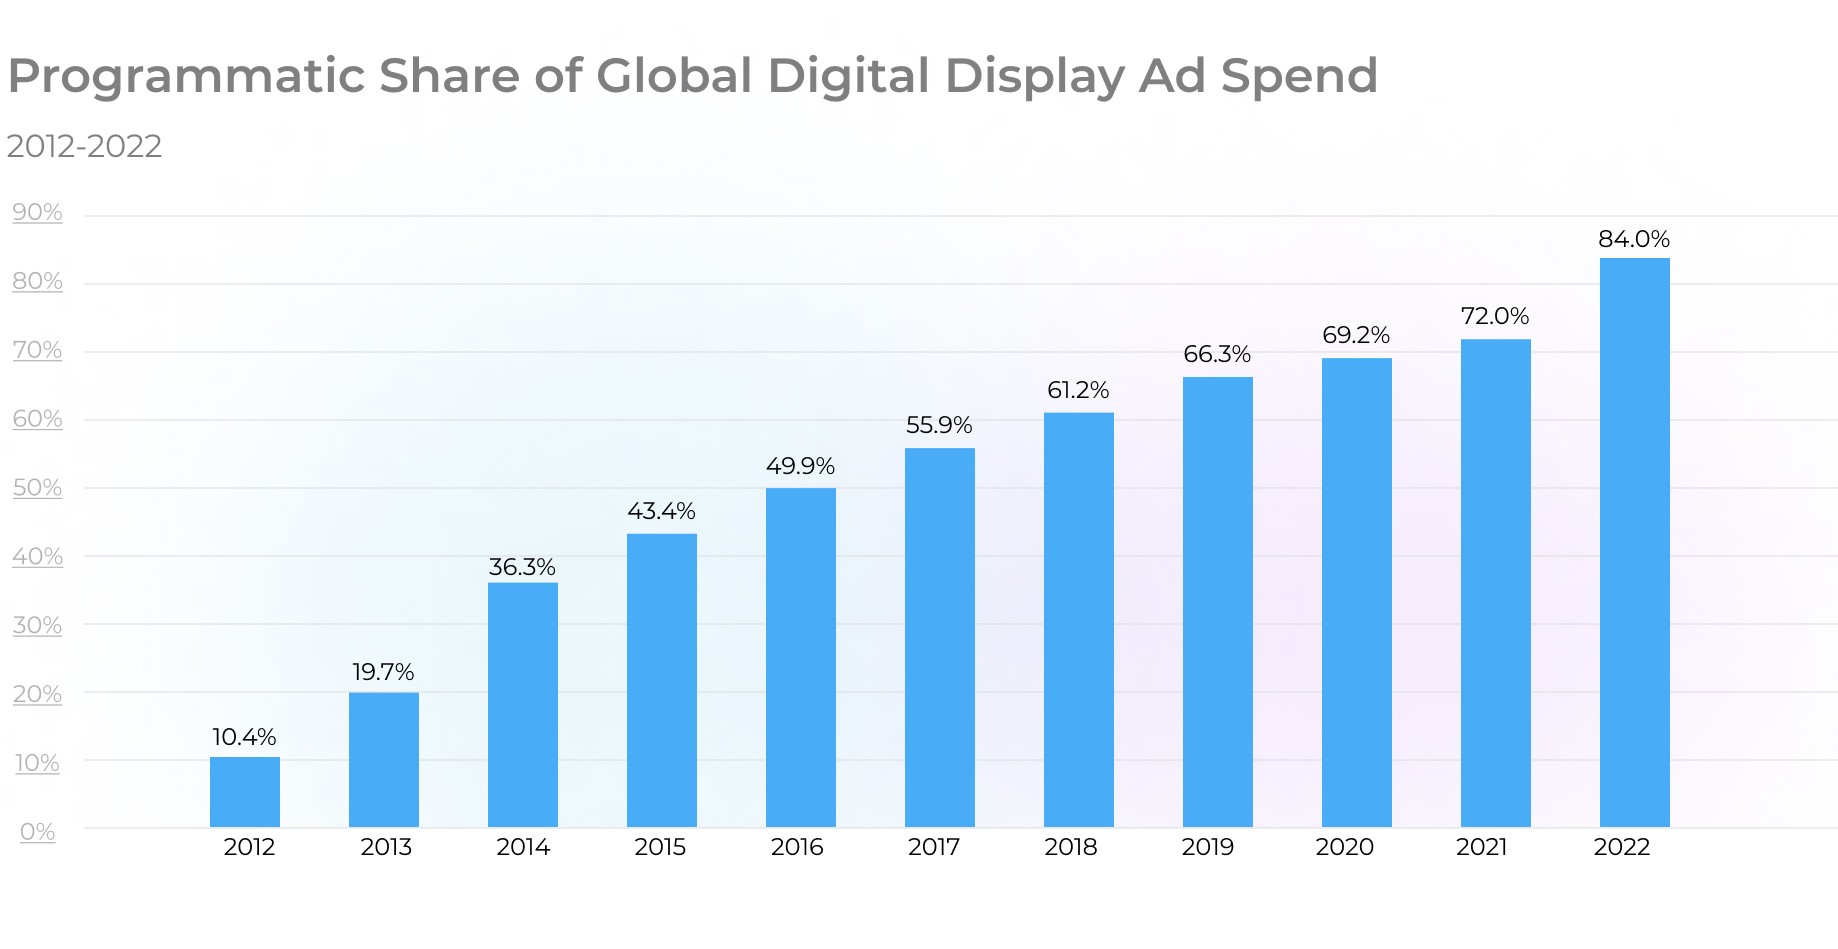 Programmatic Share of Global Digital Display Ad Spend